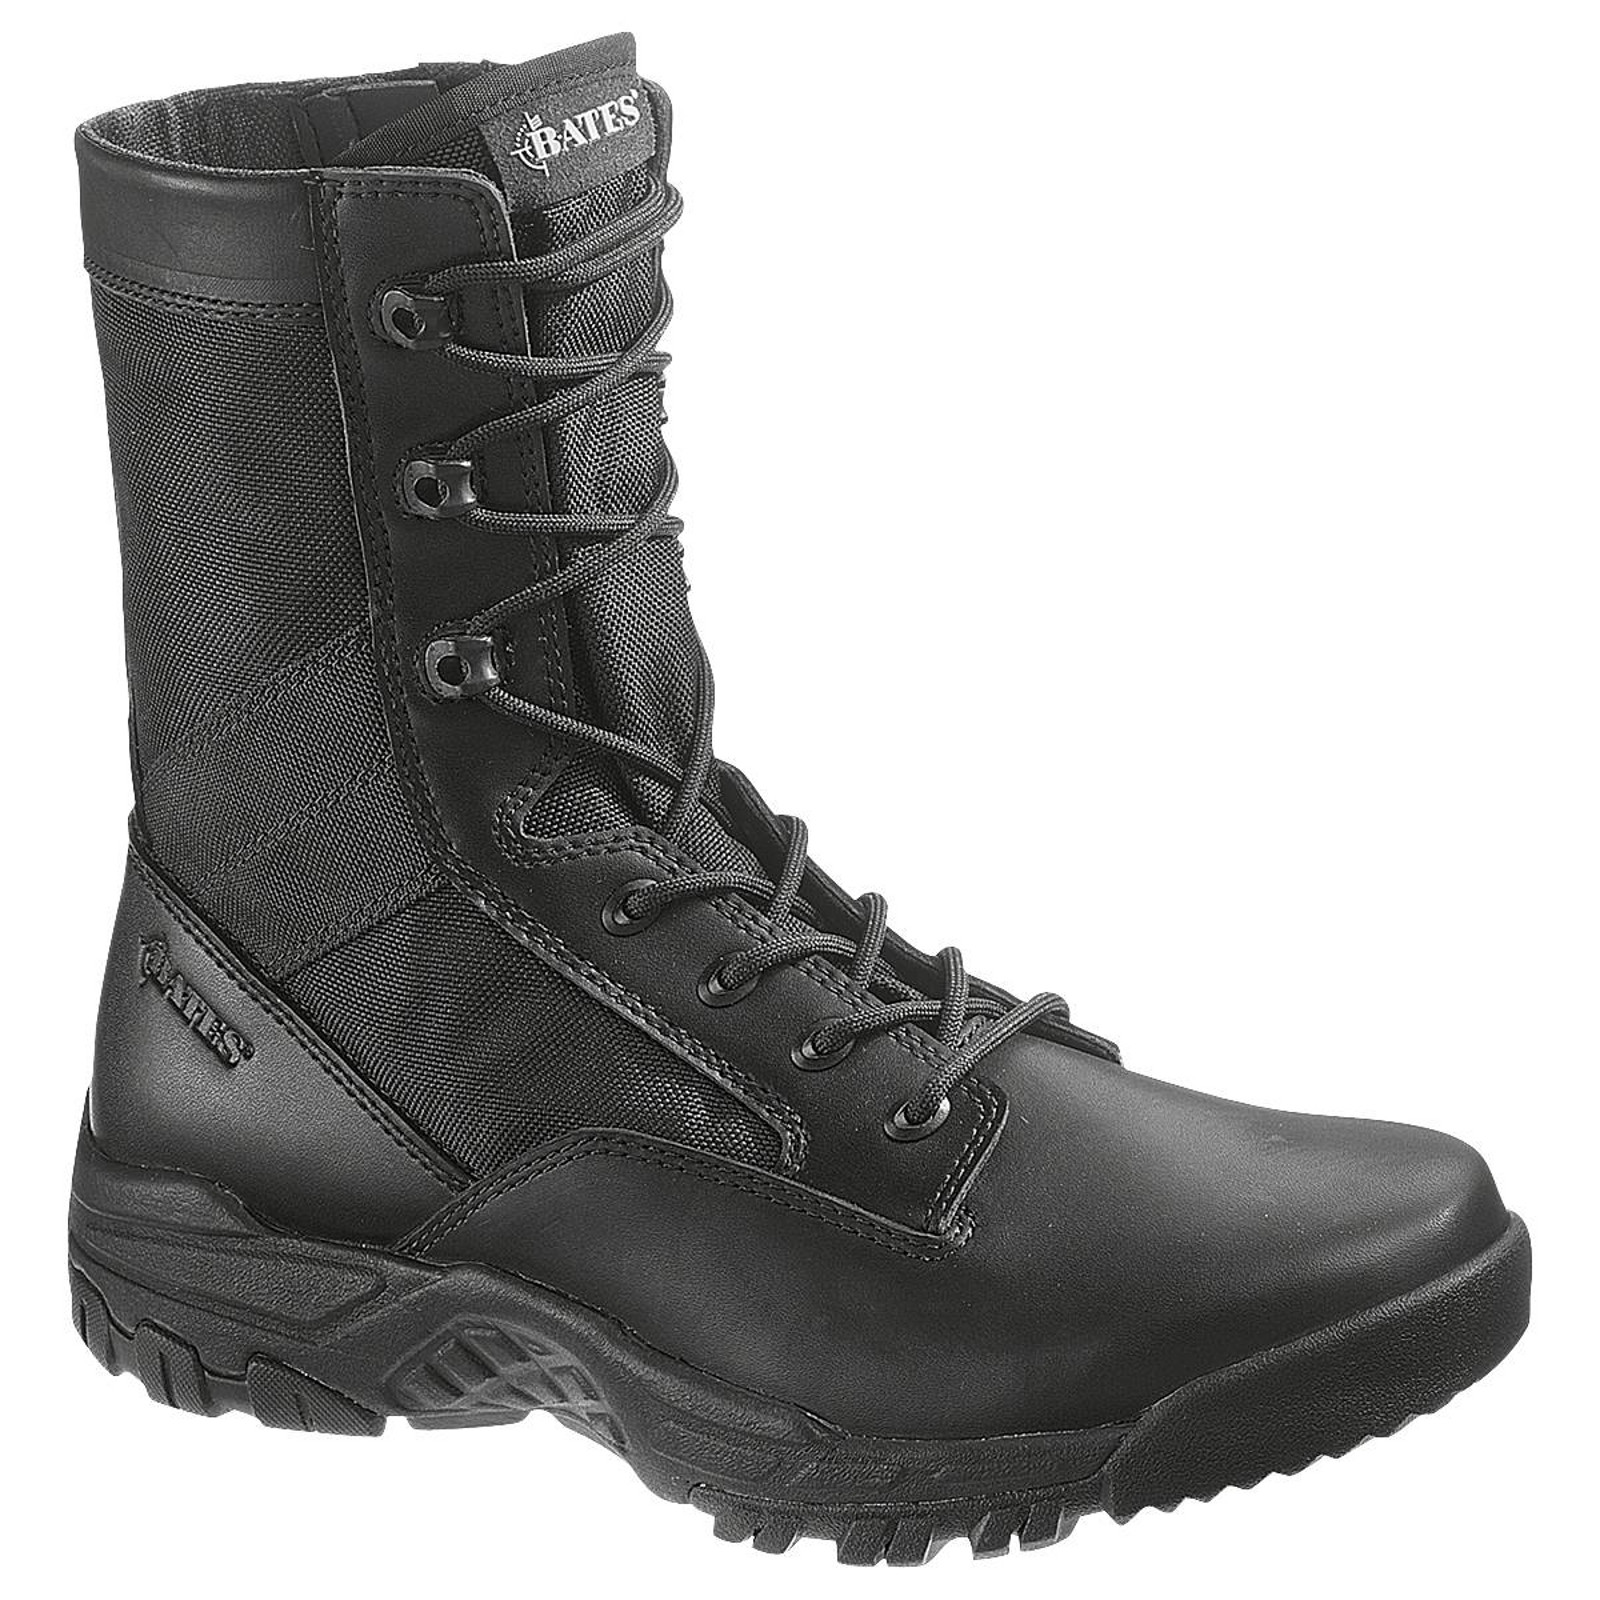 Bates Men's Zero Mass 8" Black Side Zip Tactical Work Boots - Wide Width Available